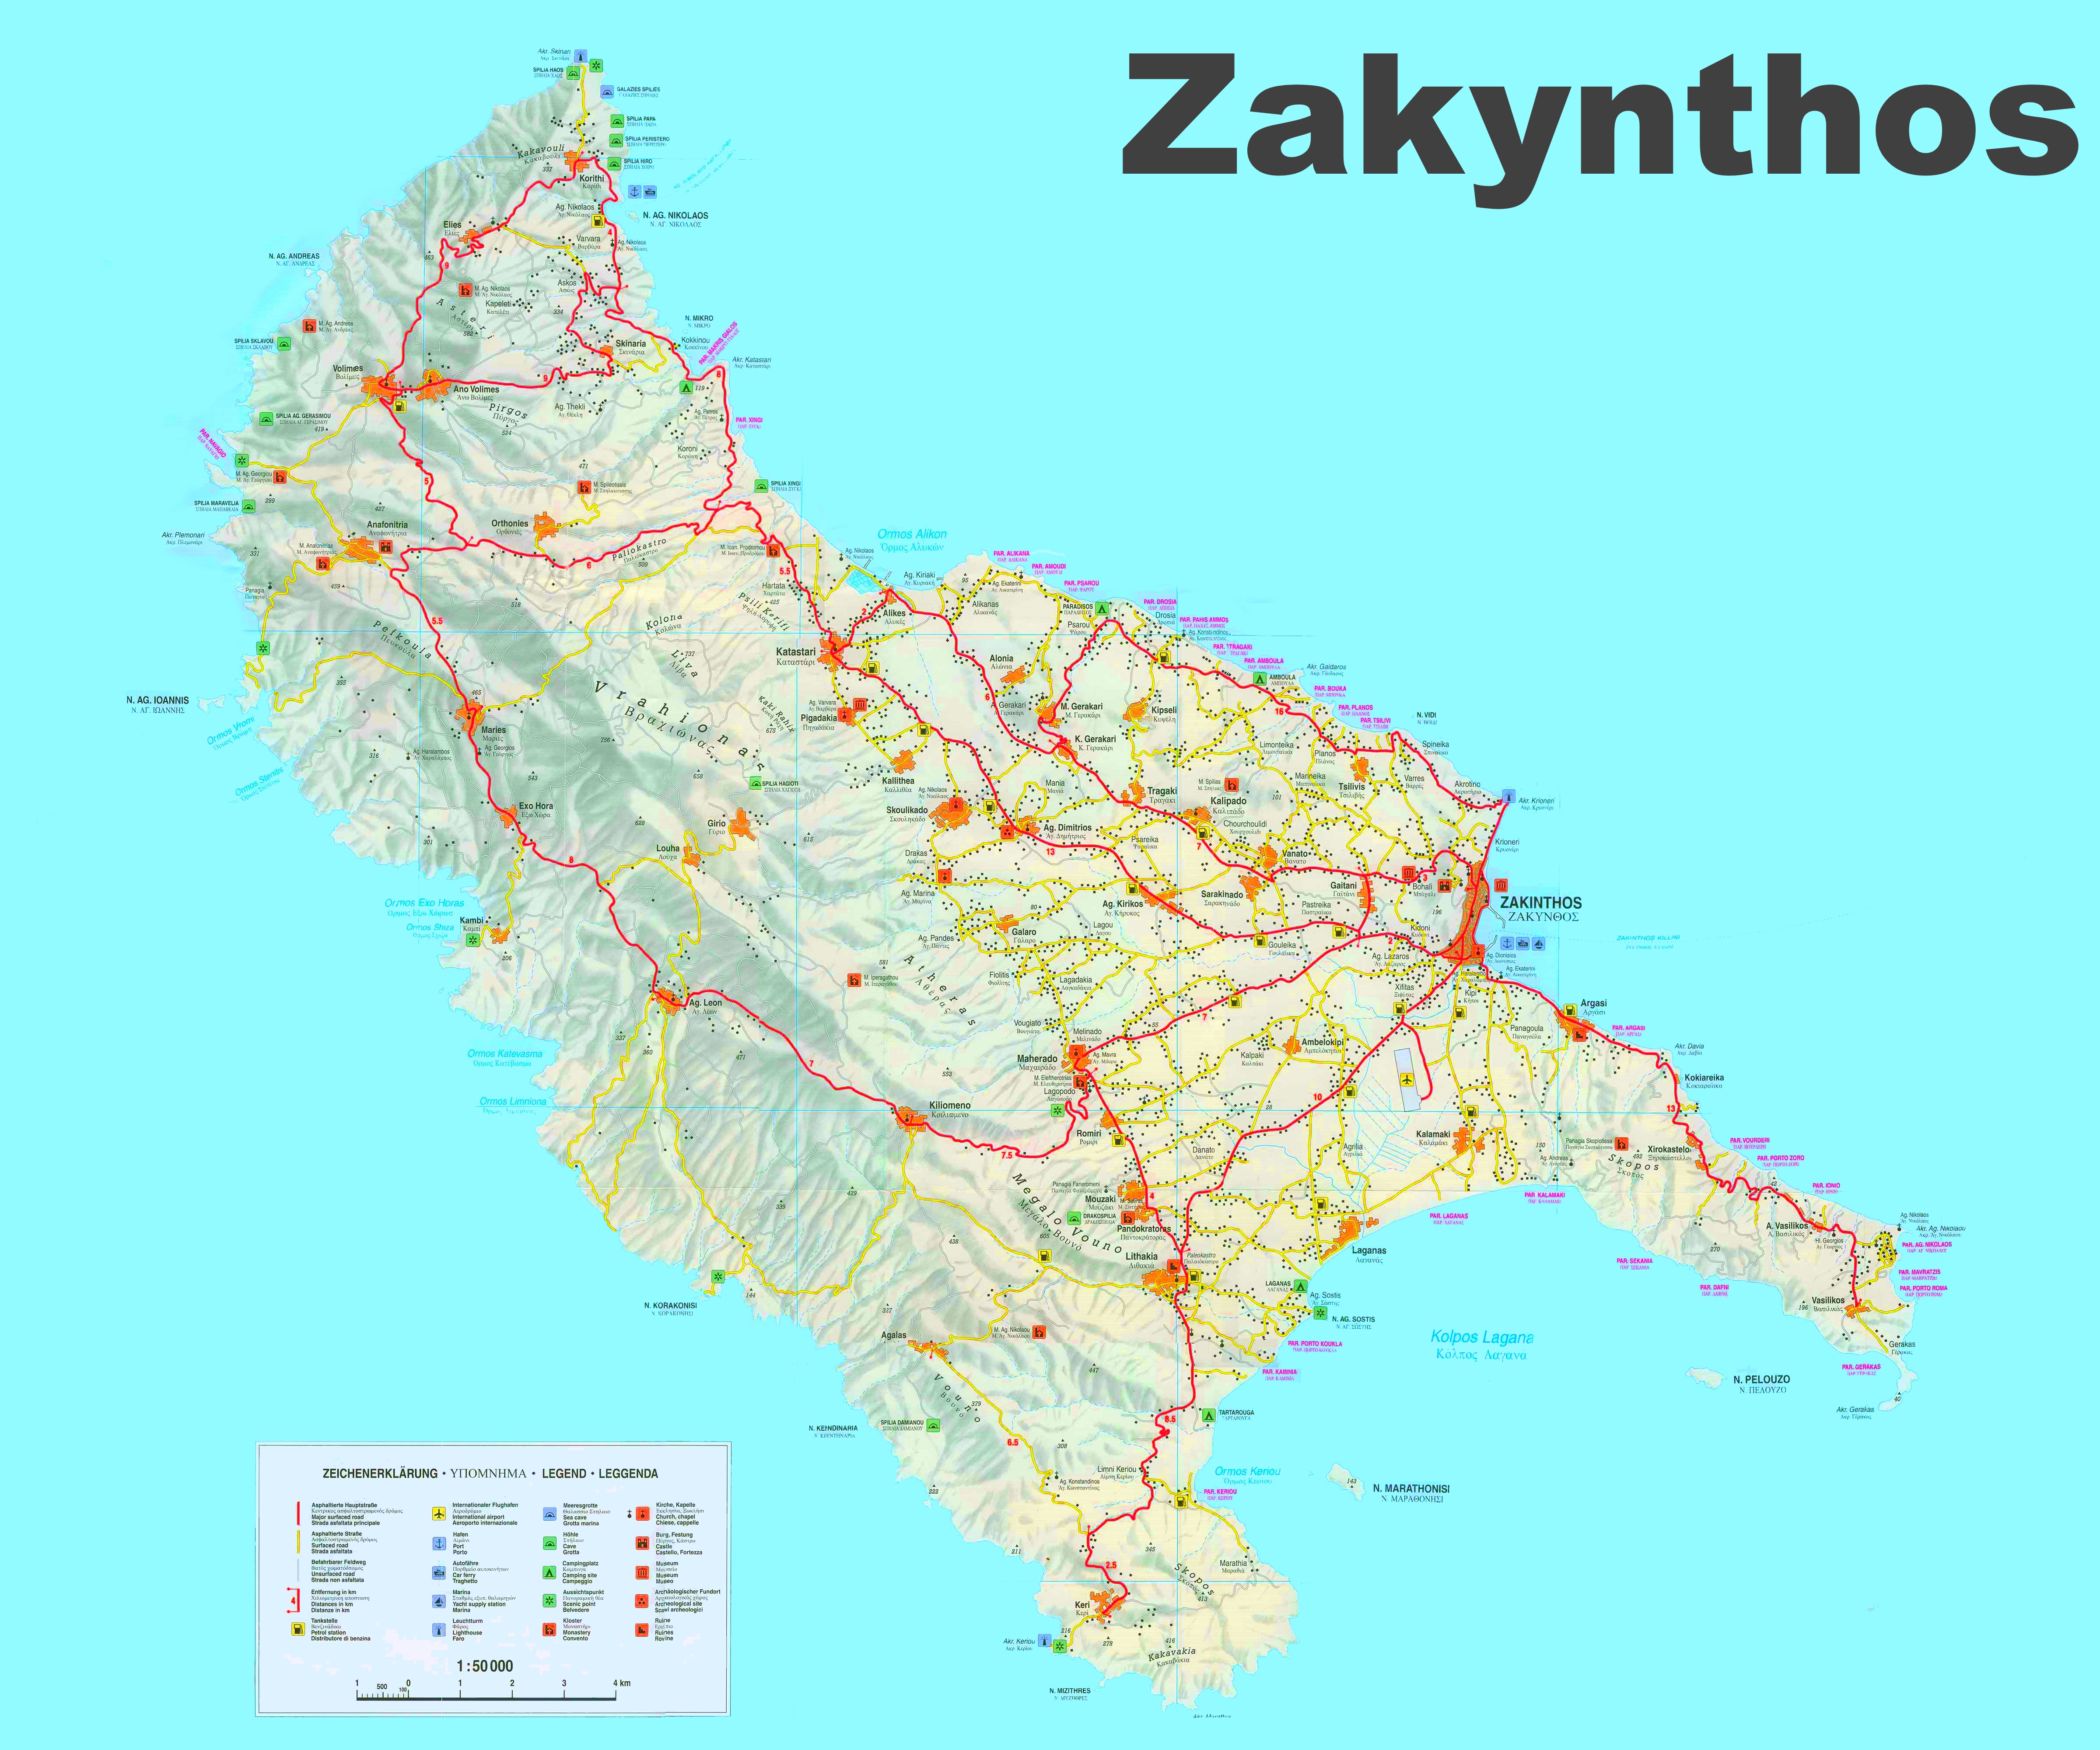 zakynthos-tourist-attractions-map.jpg